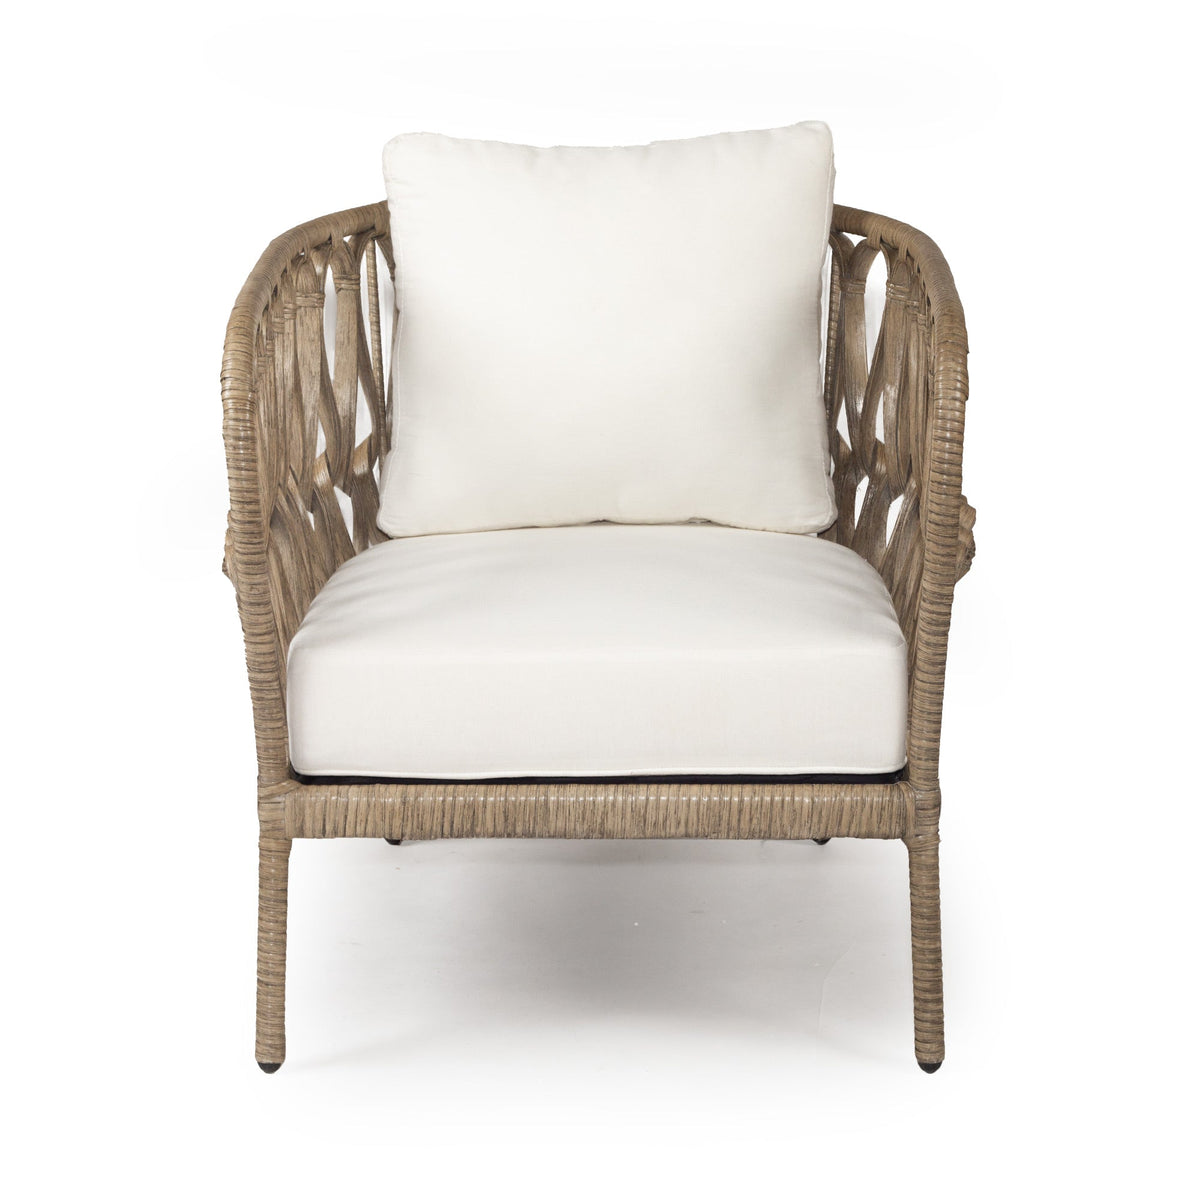 Cilla Rattan Lounge Tub Chair - Grey Wash - Notbrand